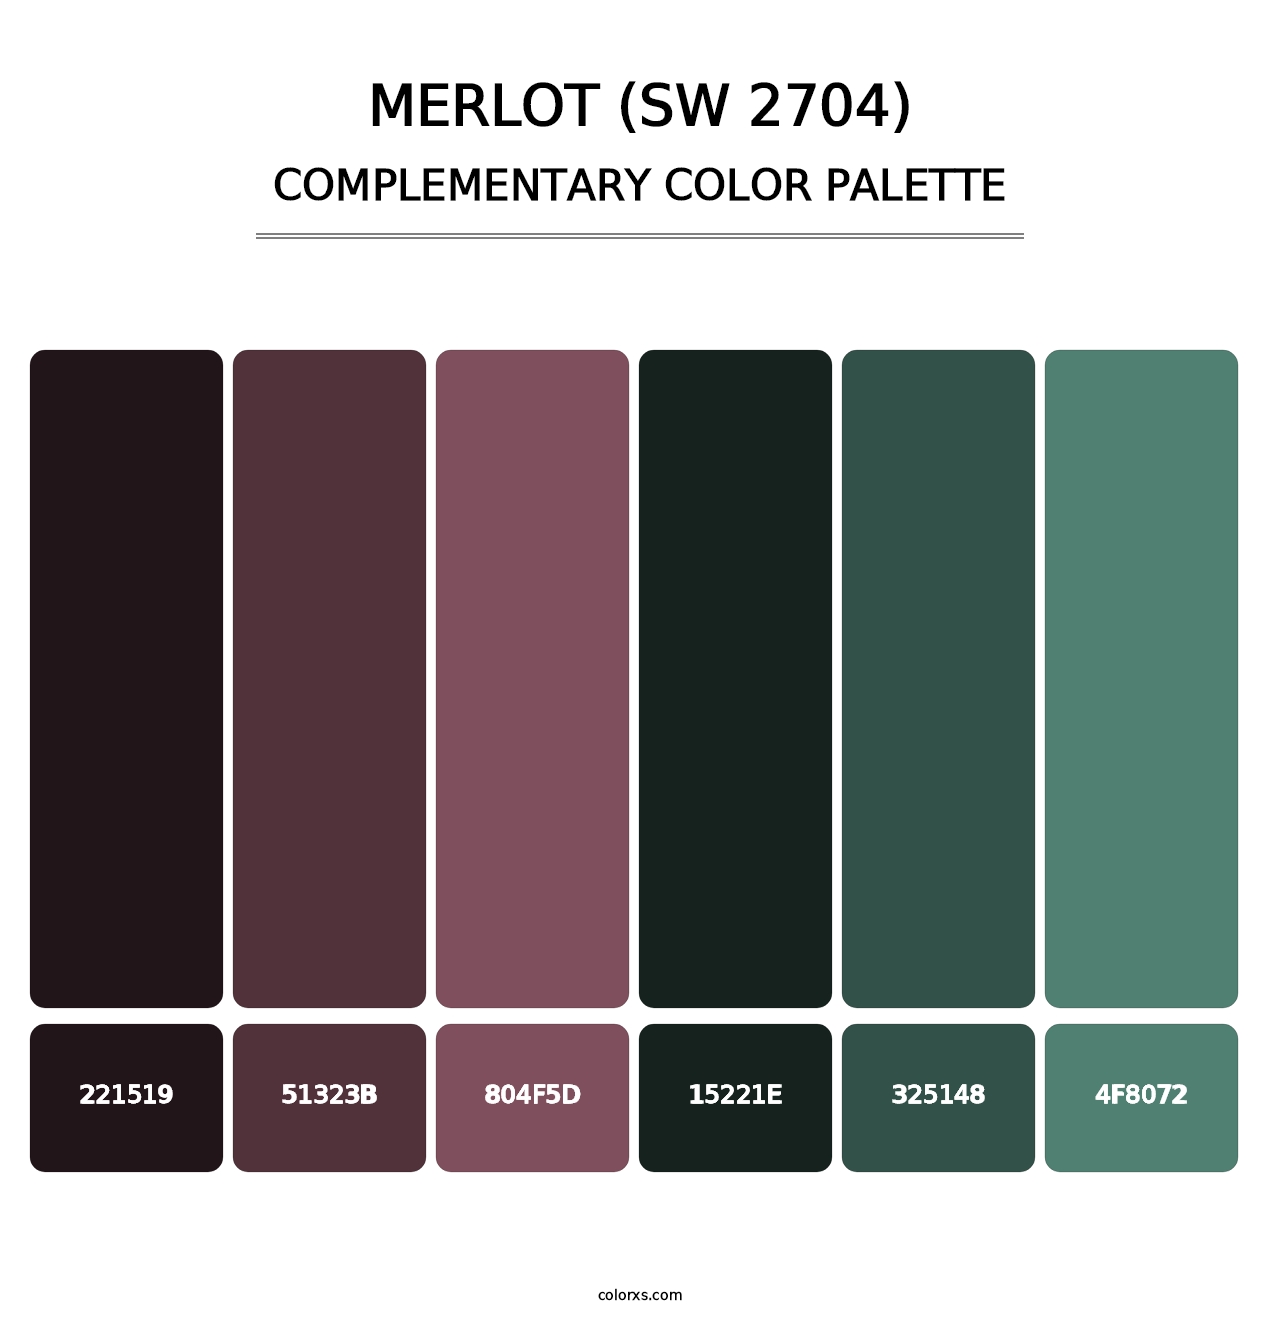 Merlot (SW 2704) - Complementary Color Palette